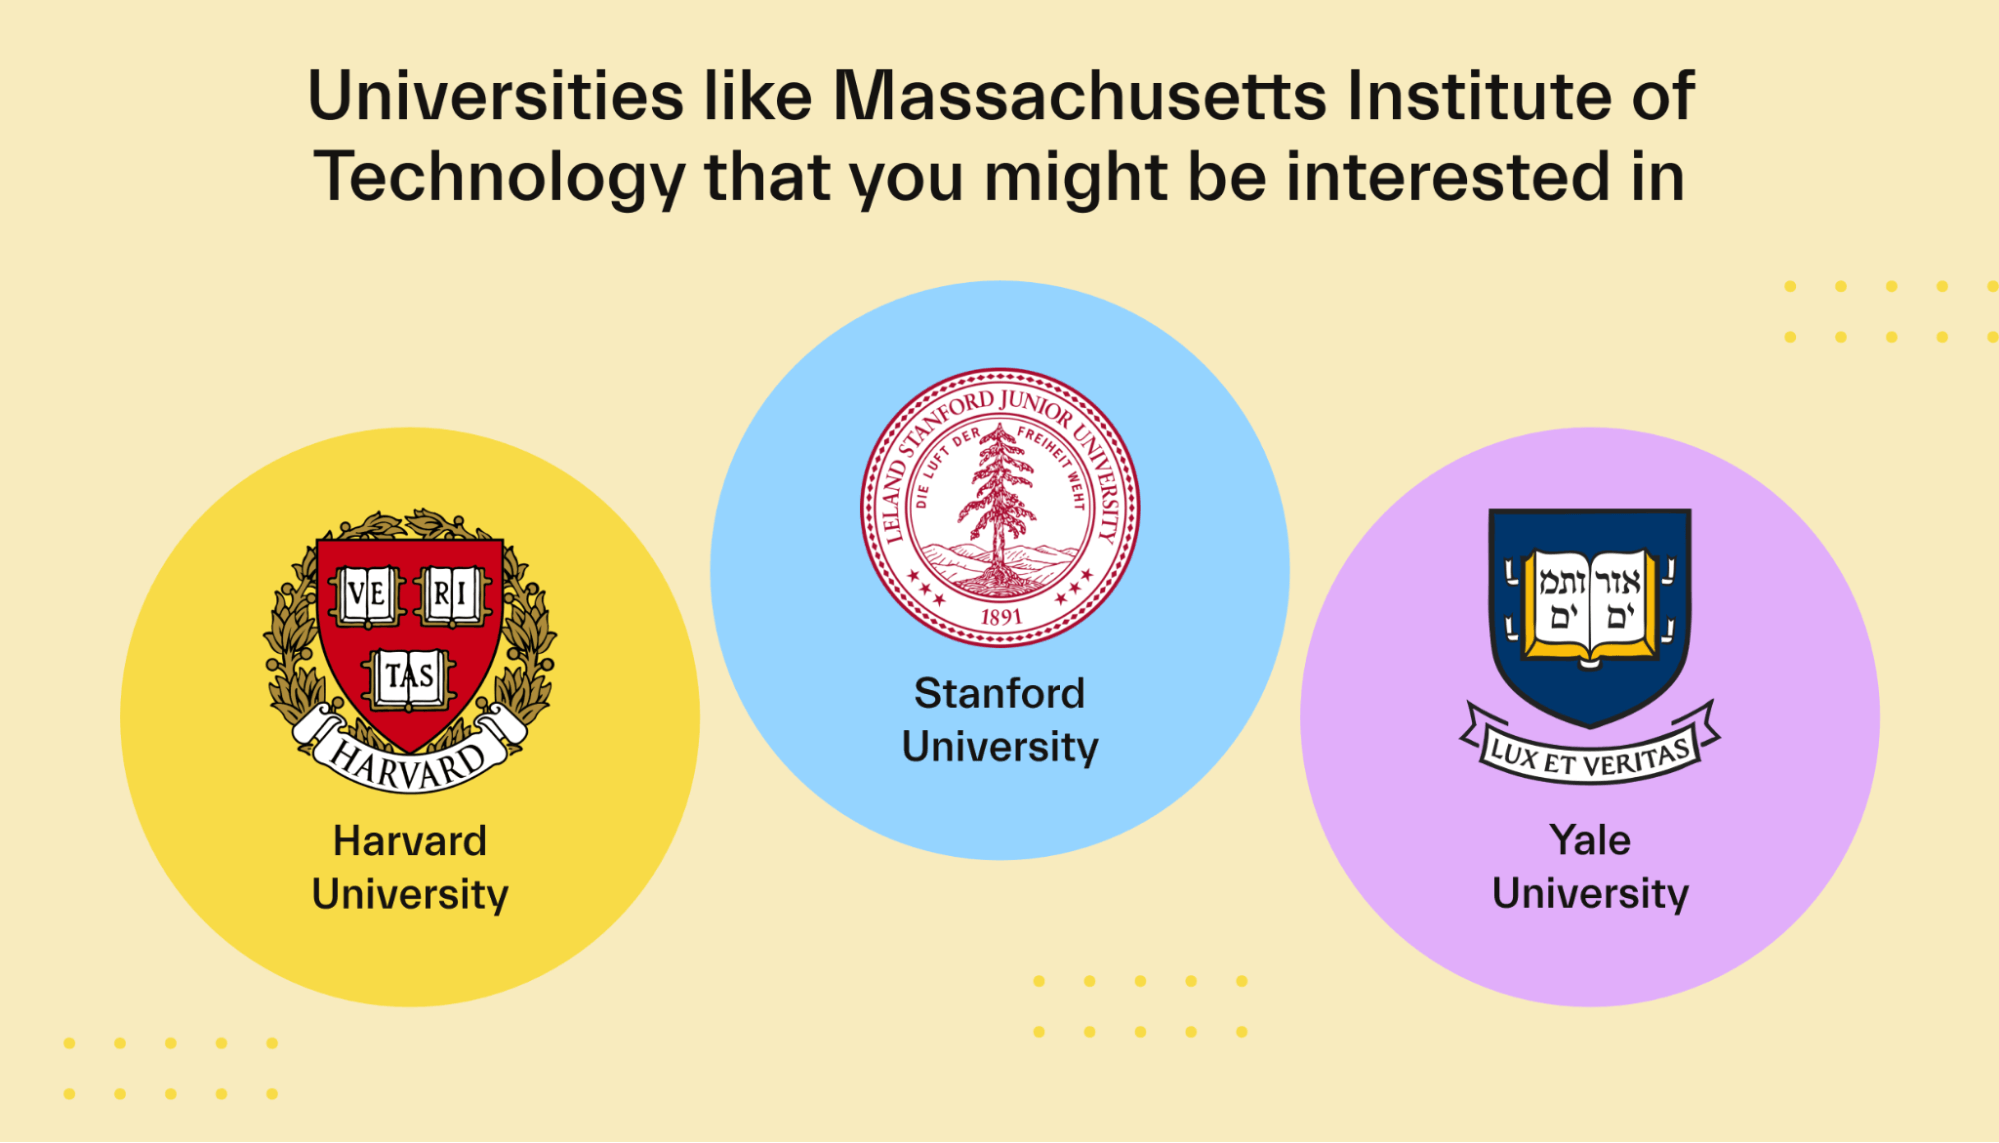 Universities like MIT